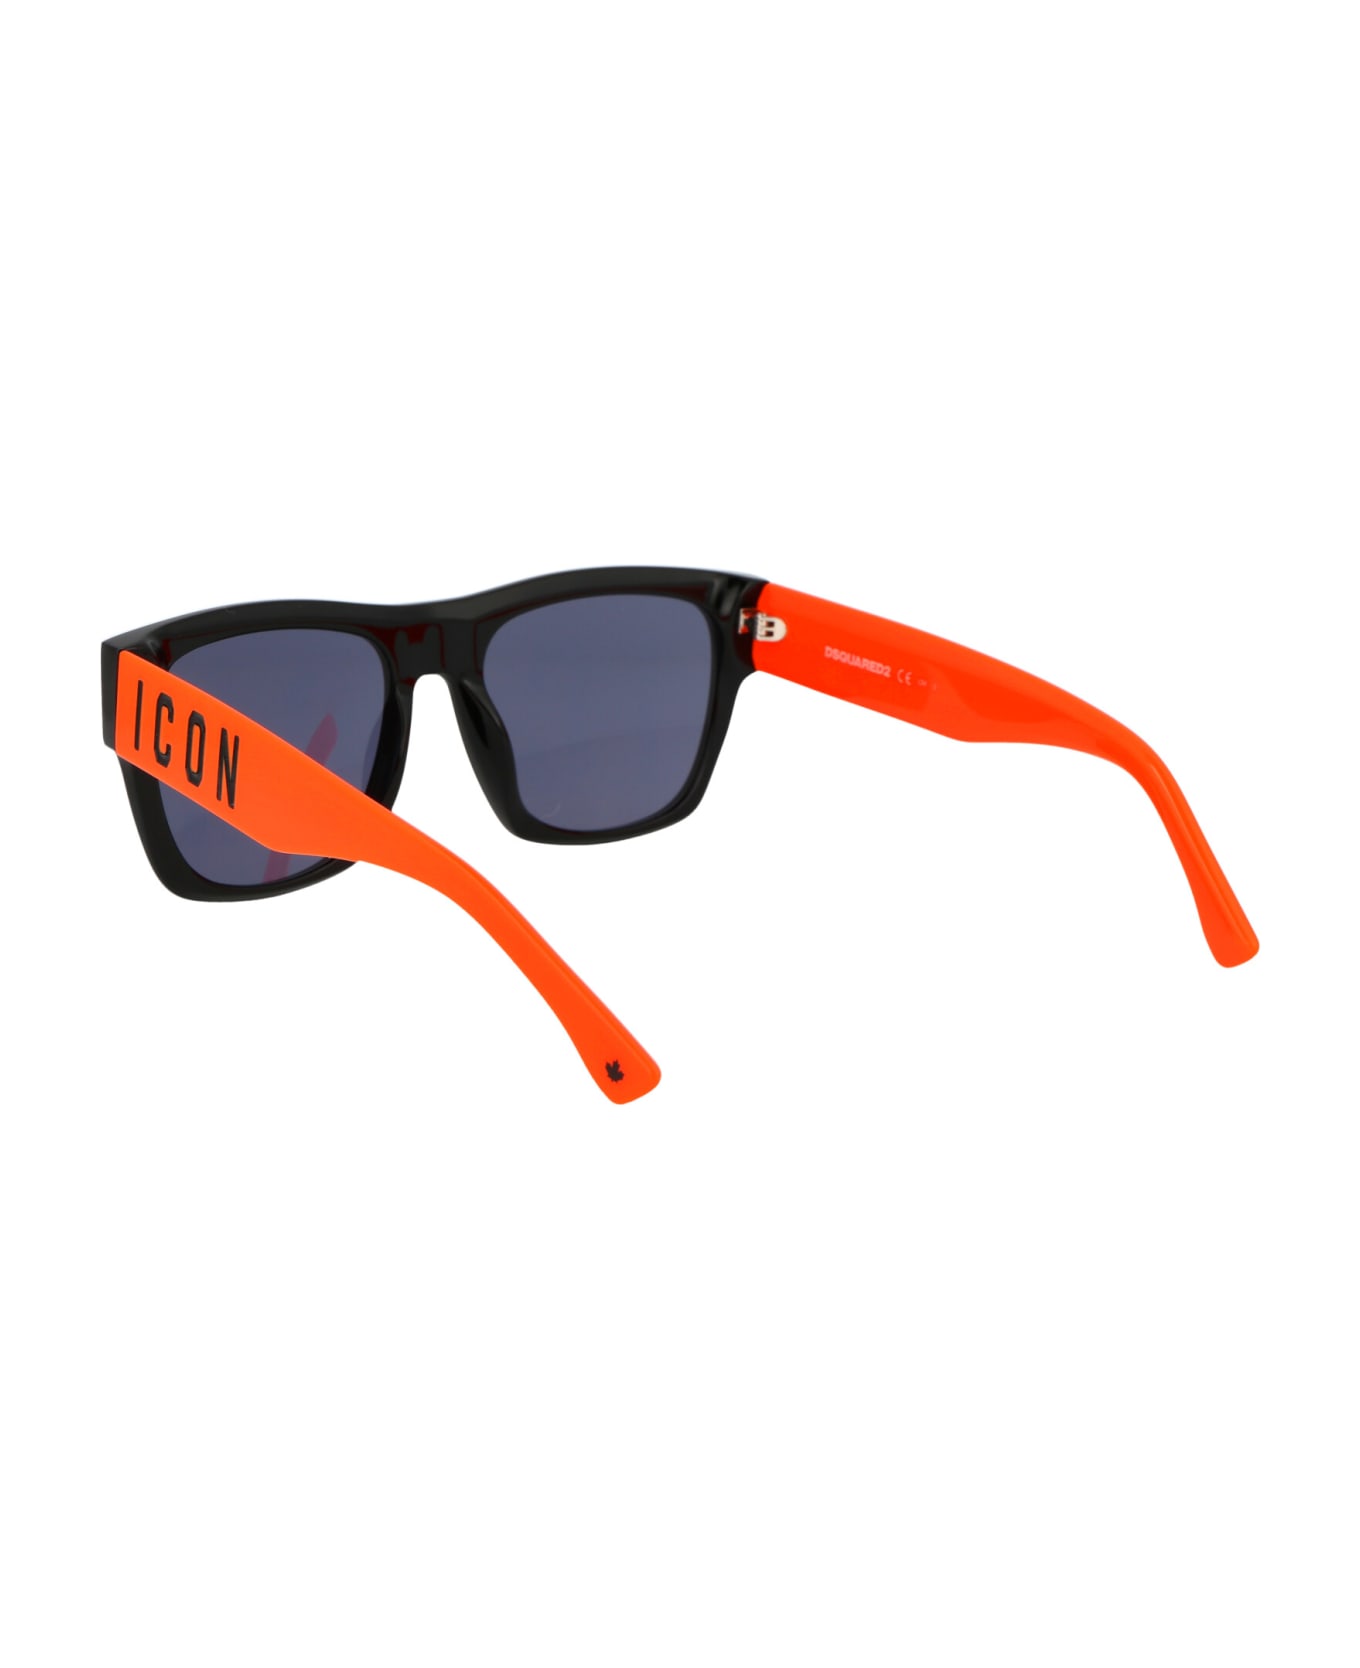 Dsquared2 Eyewear Icon 0004/s Sunglasses - 8LZ7Y BLACK ORANGE サングラス